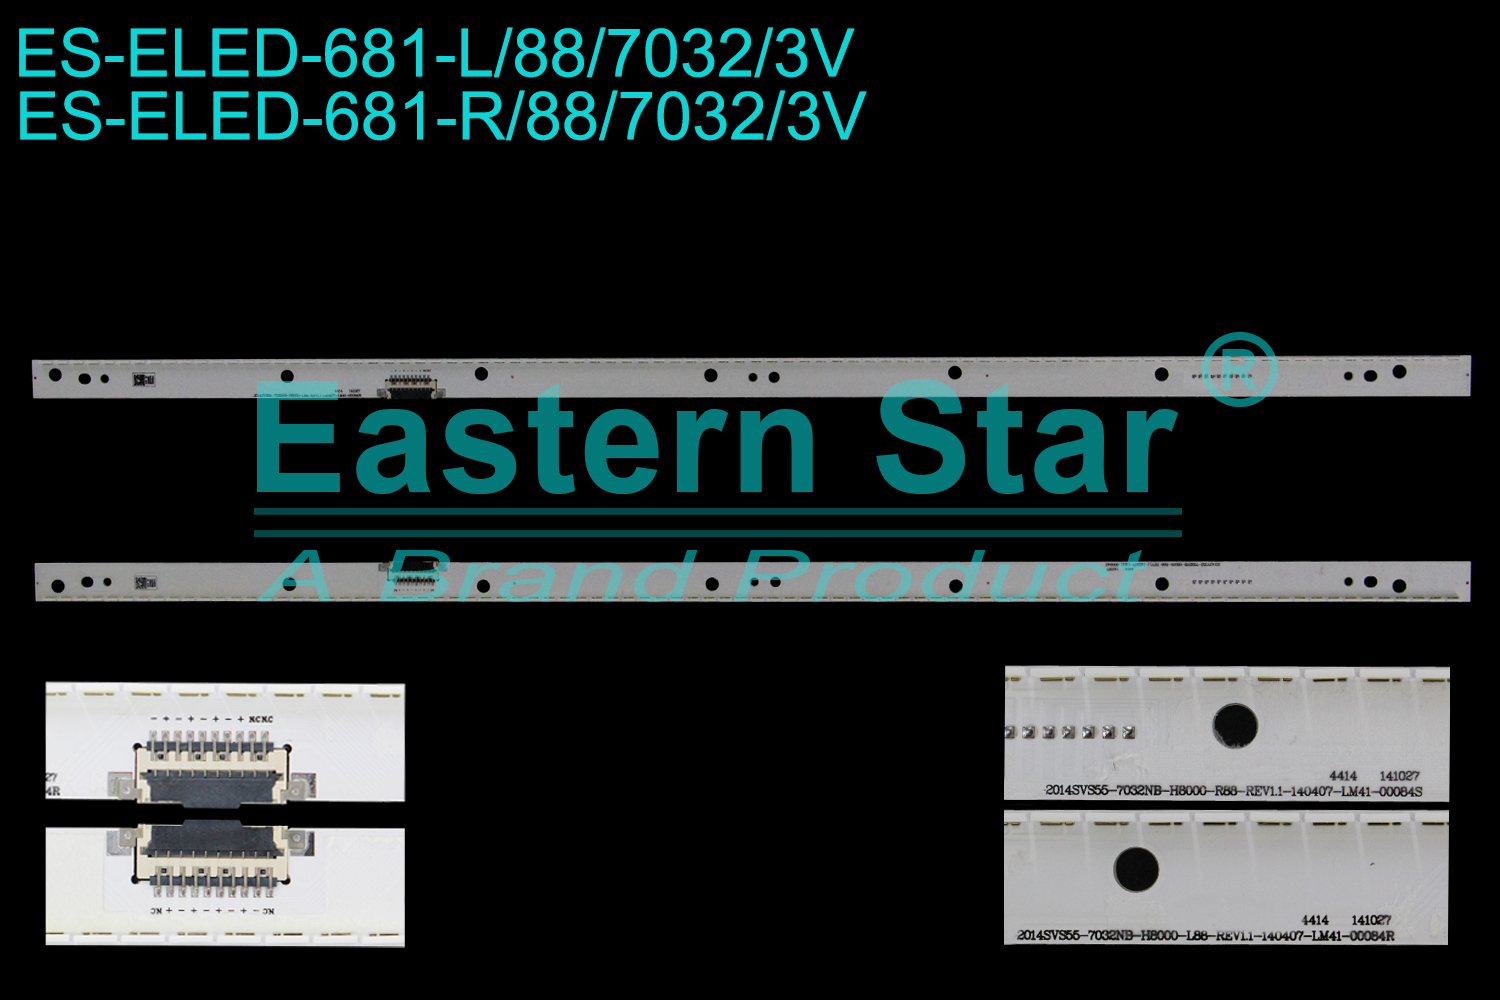 ES-ELED-681 ELED/EDGE TV backlight use for 55''  Samsung  UA55H6800AJ L:2014SVS55-7032NB-H8000-L88-REV1.1-140407-LM41-00084R R:2014SVS55-7032NB-H8000-R88-REV1.1-140407-LM41-00084S LED STRIPS(2)